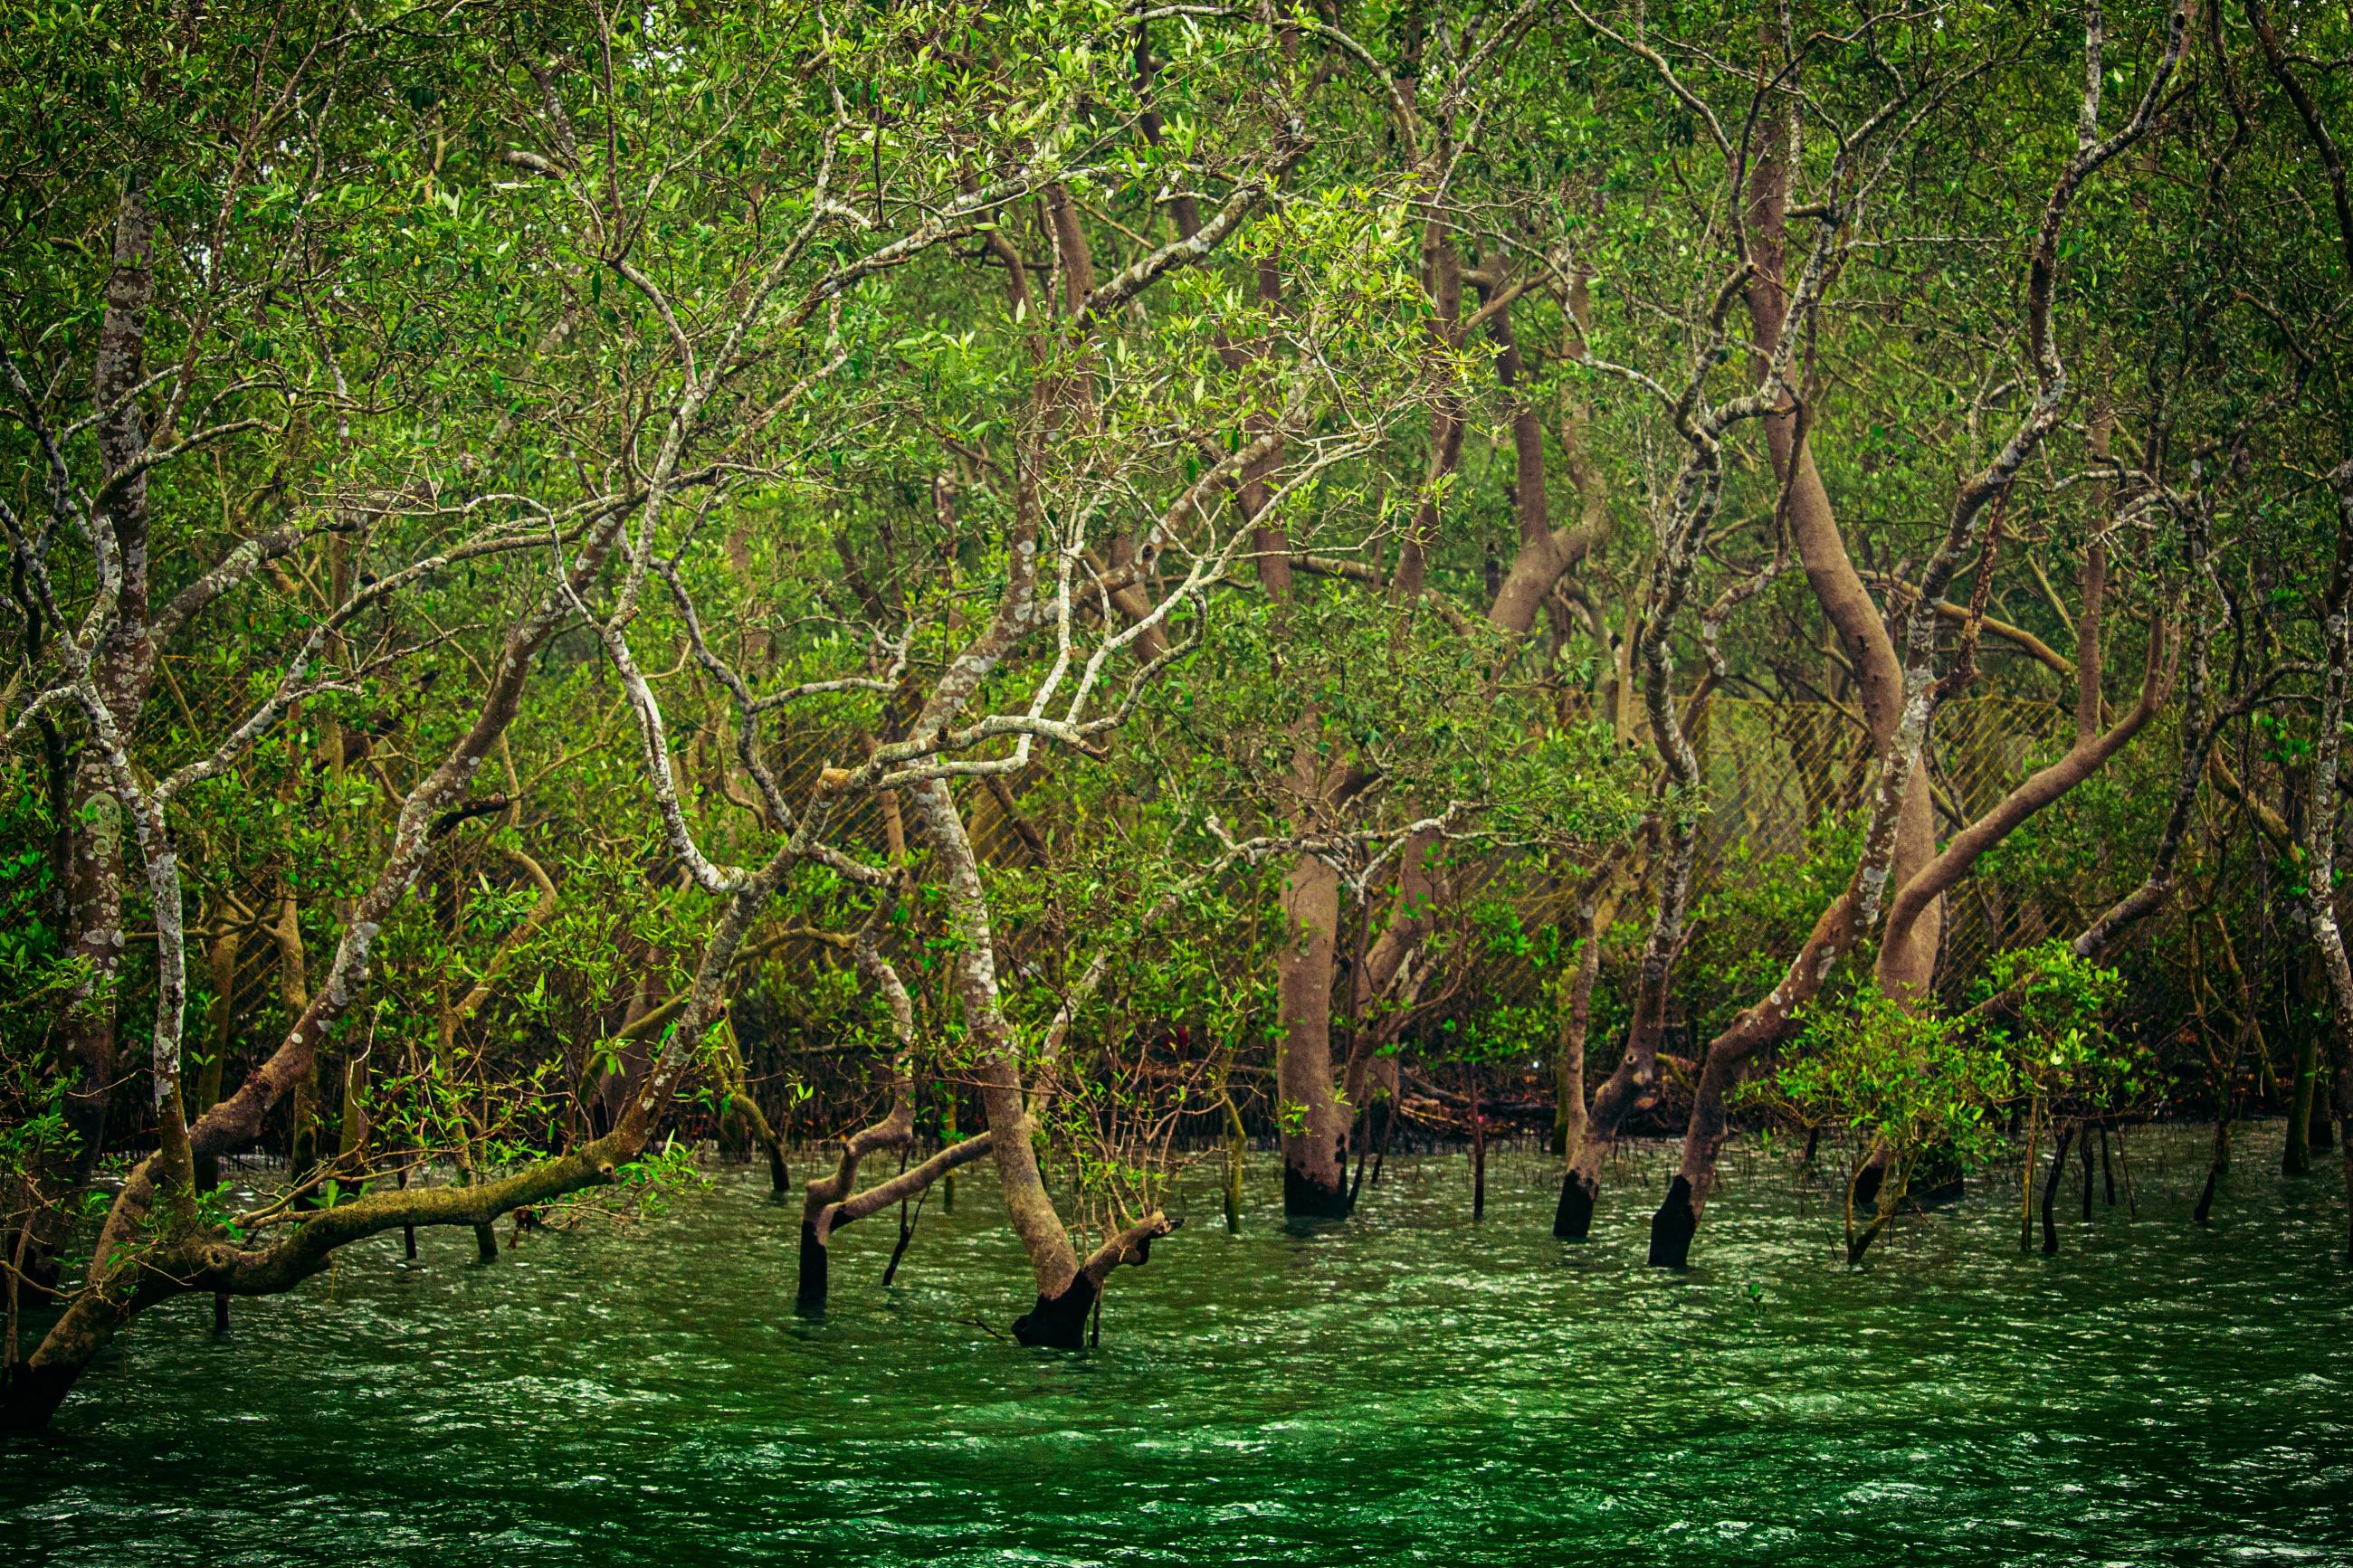 Mangrove trees in the Sundarbans. (Photo /Maitheli Maitra/Unsplash)